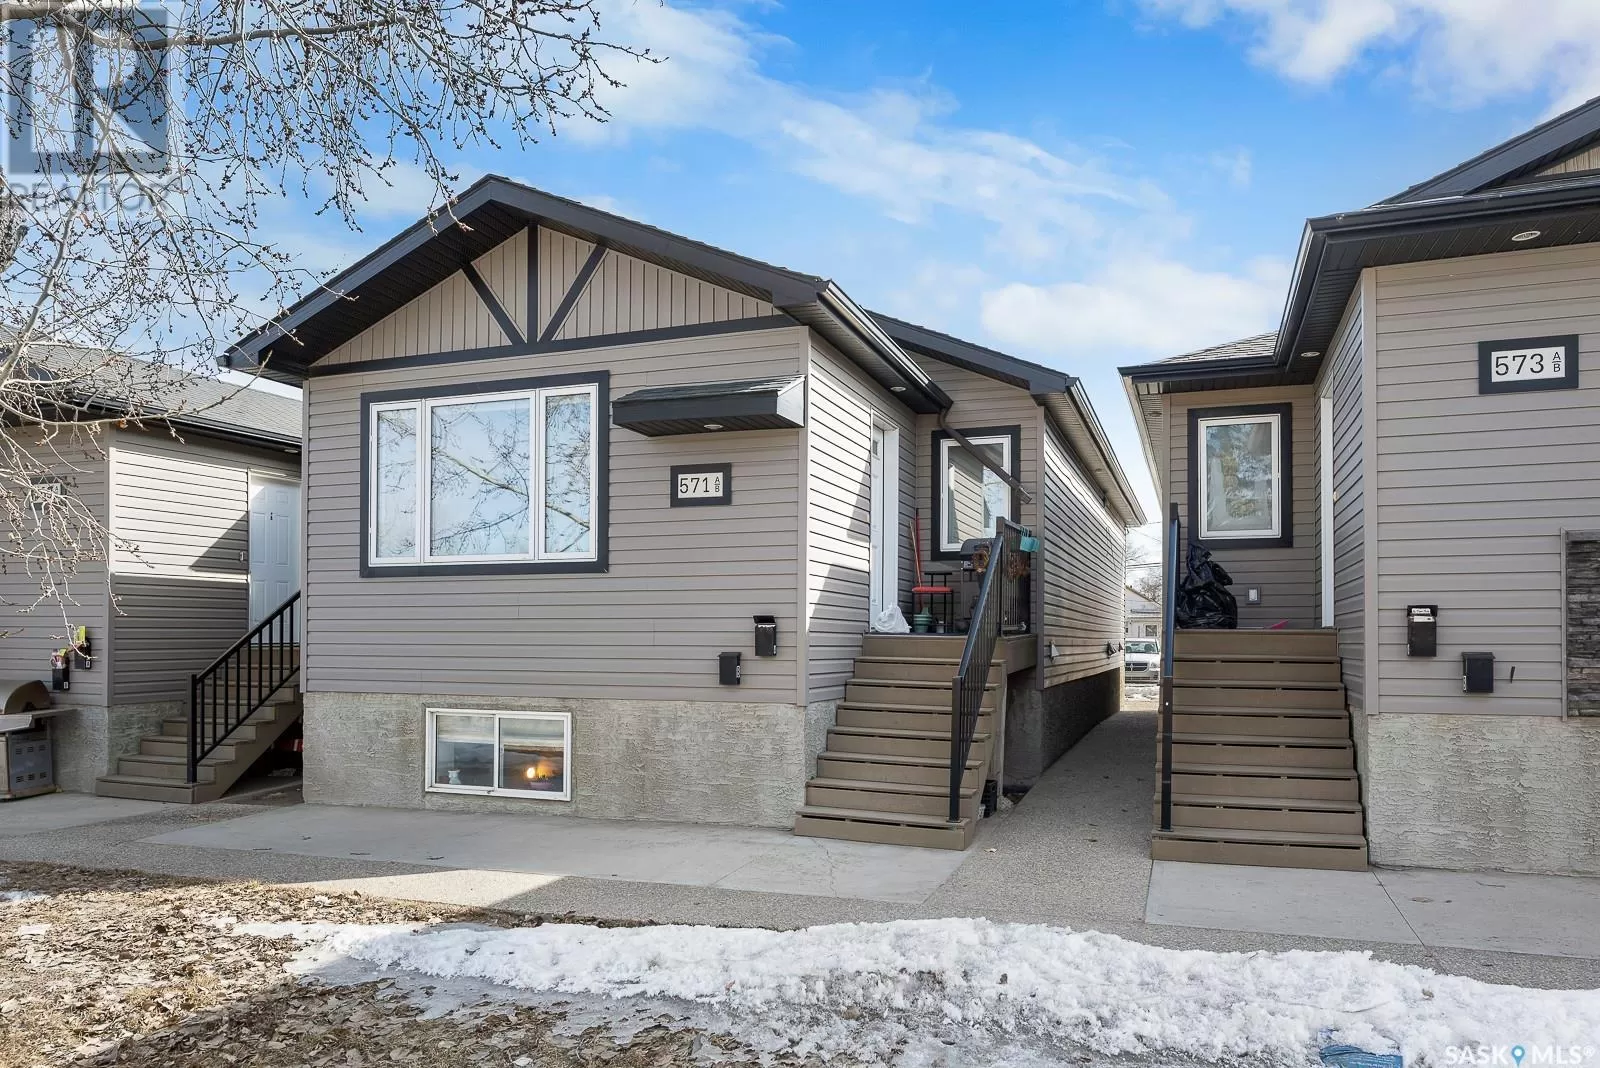 House for rent: 571 Elphinstone Street, Regina, Saskatchewan S4R 3W8